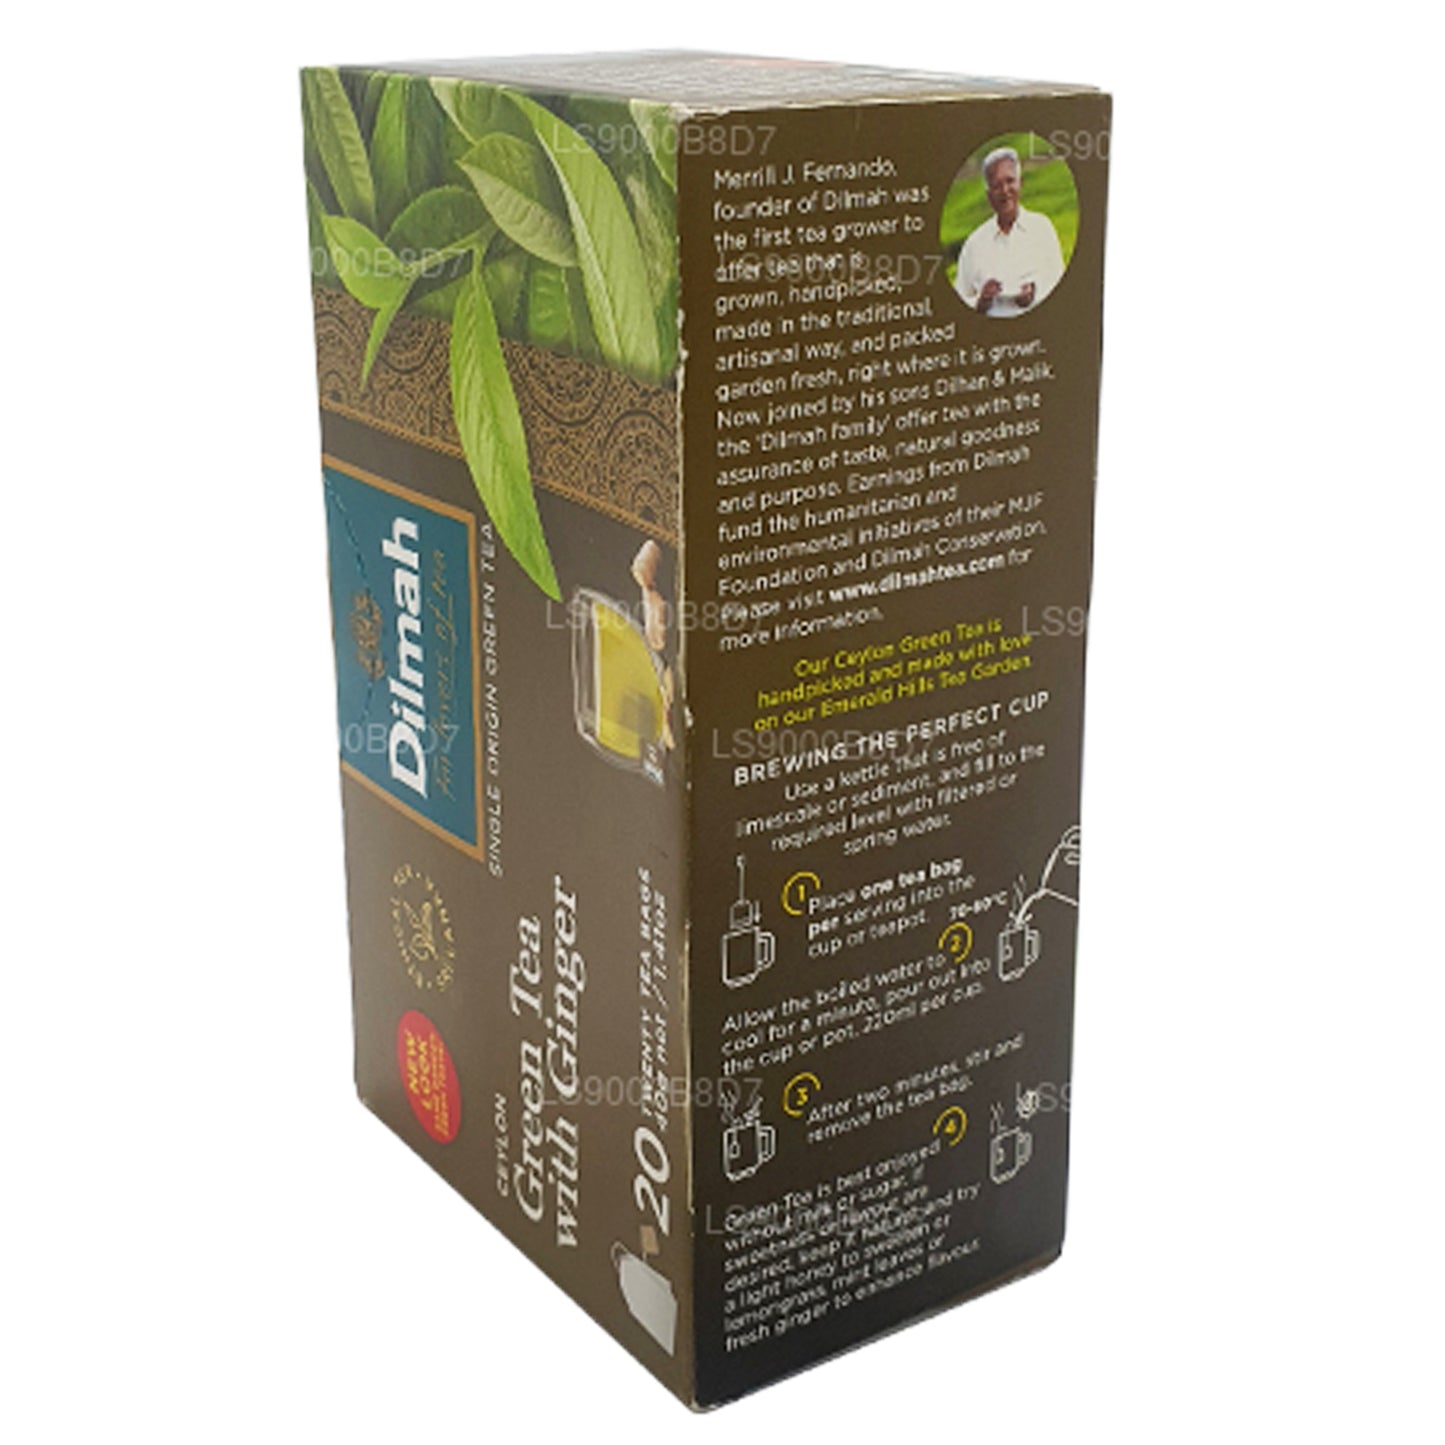 Dilmah Green Tea With Ginger (40g) 20 Tea Bags